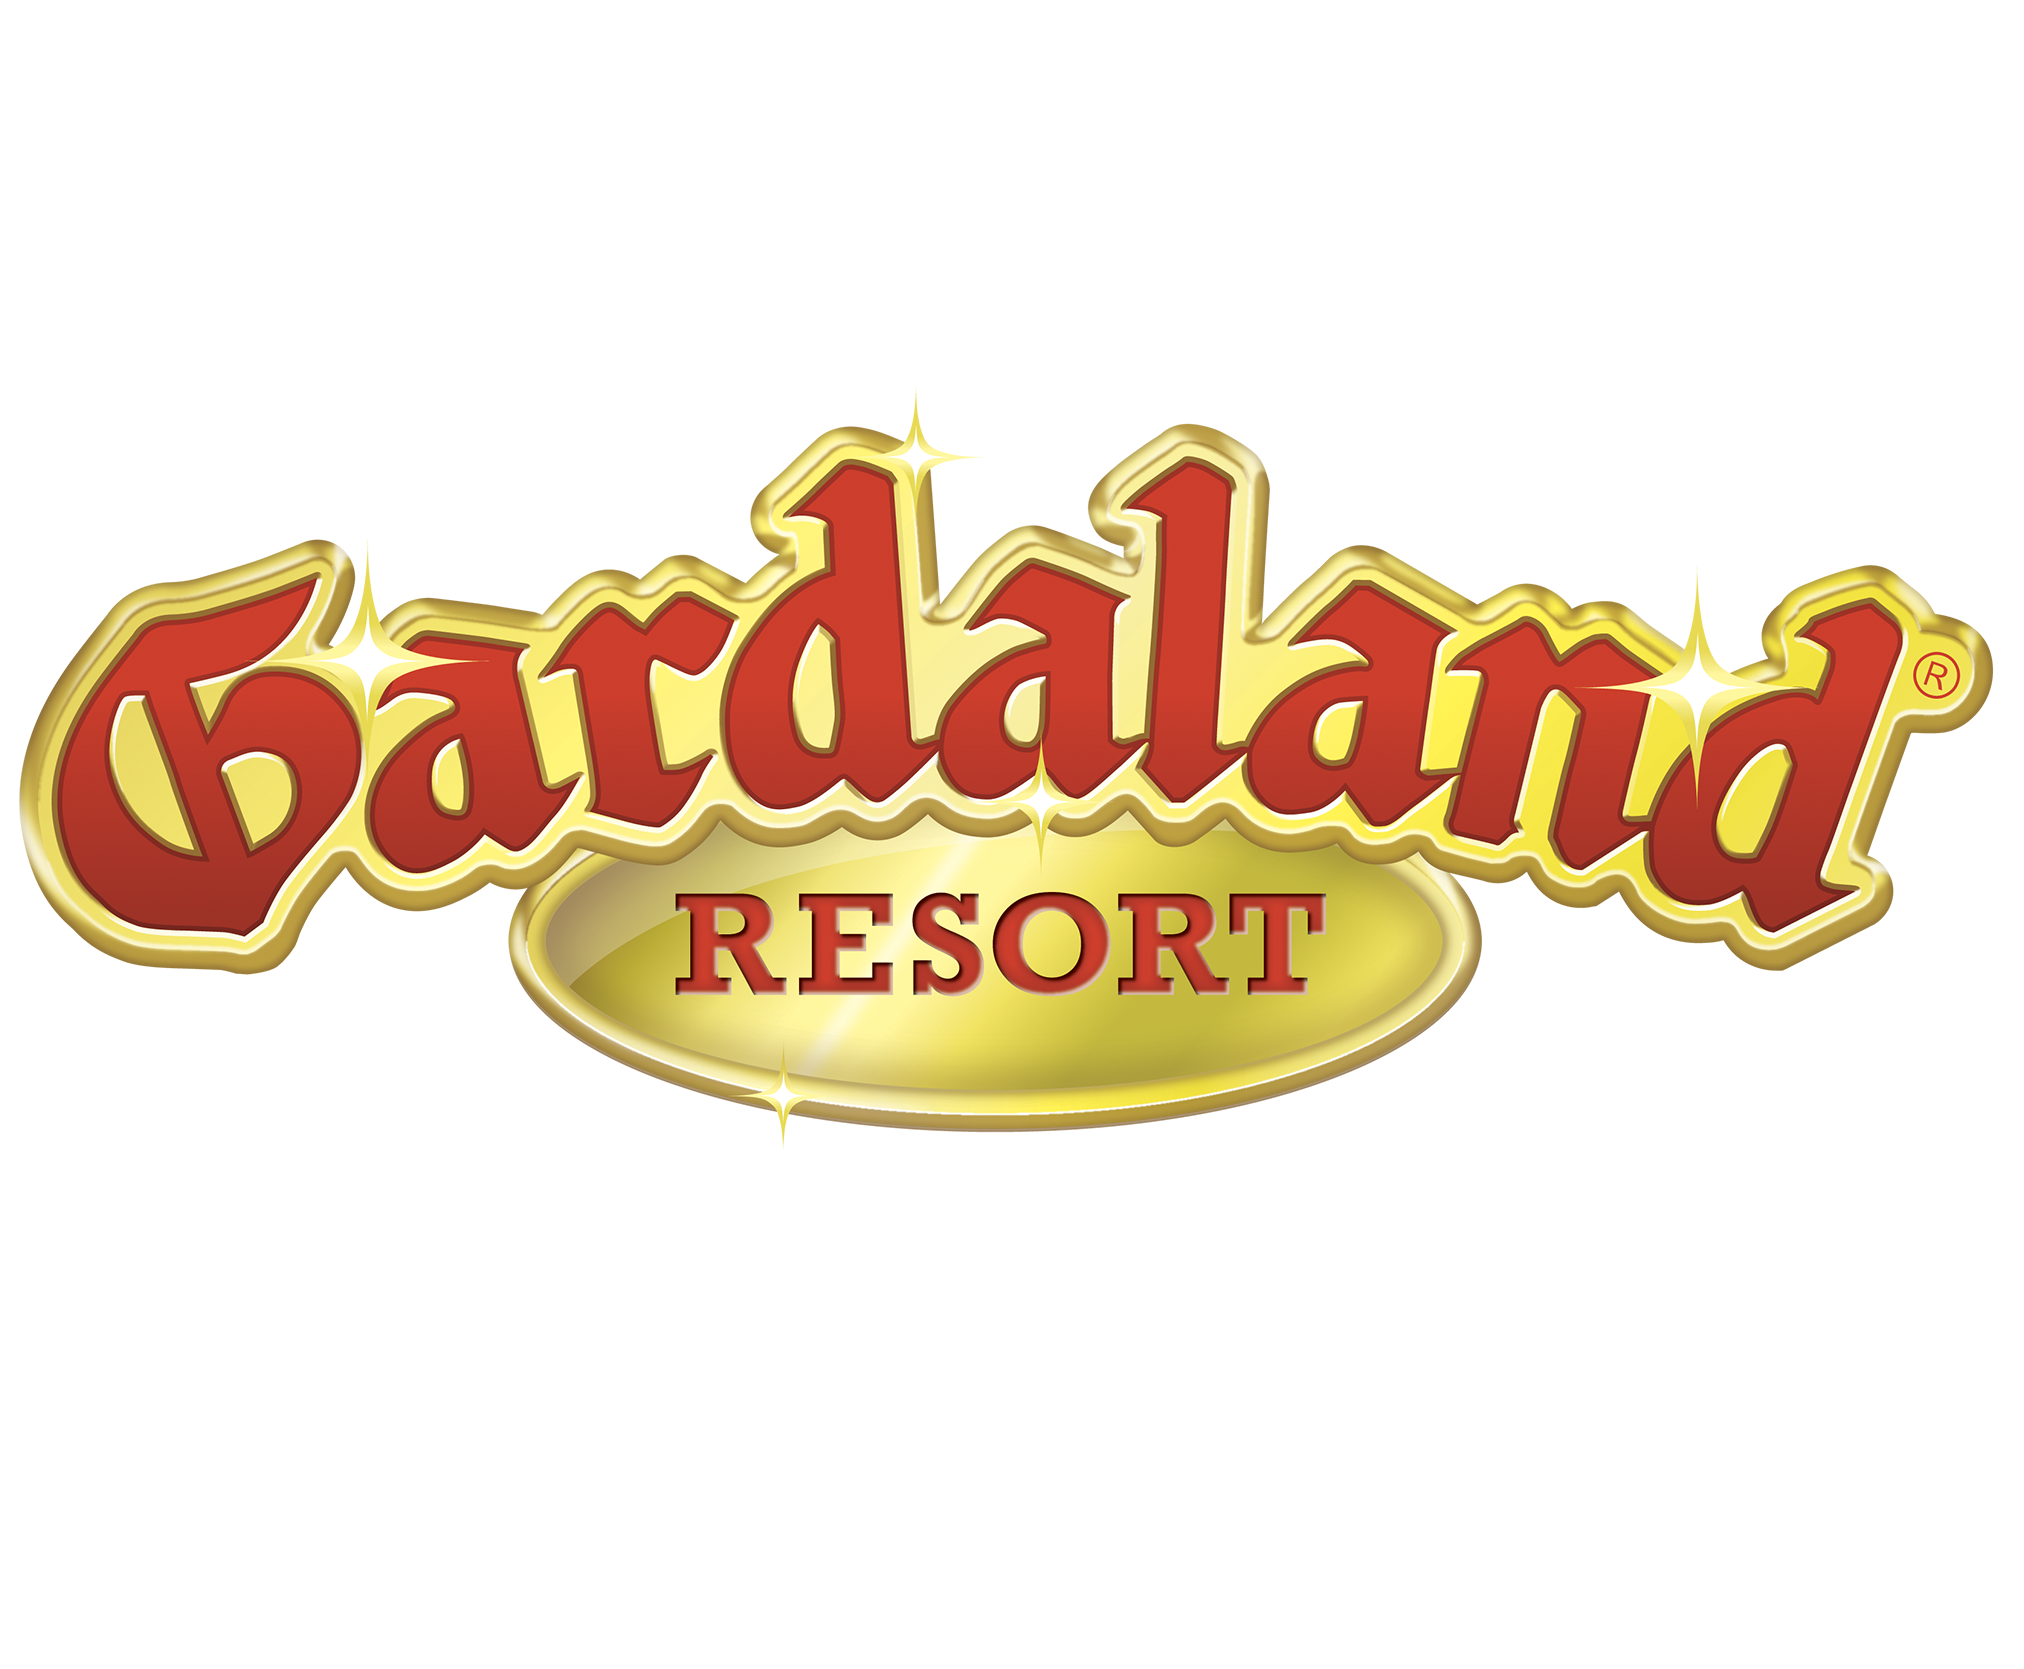 Gardaland Coupons & Promo Codes